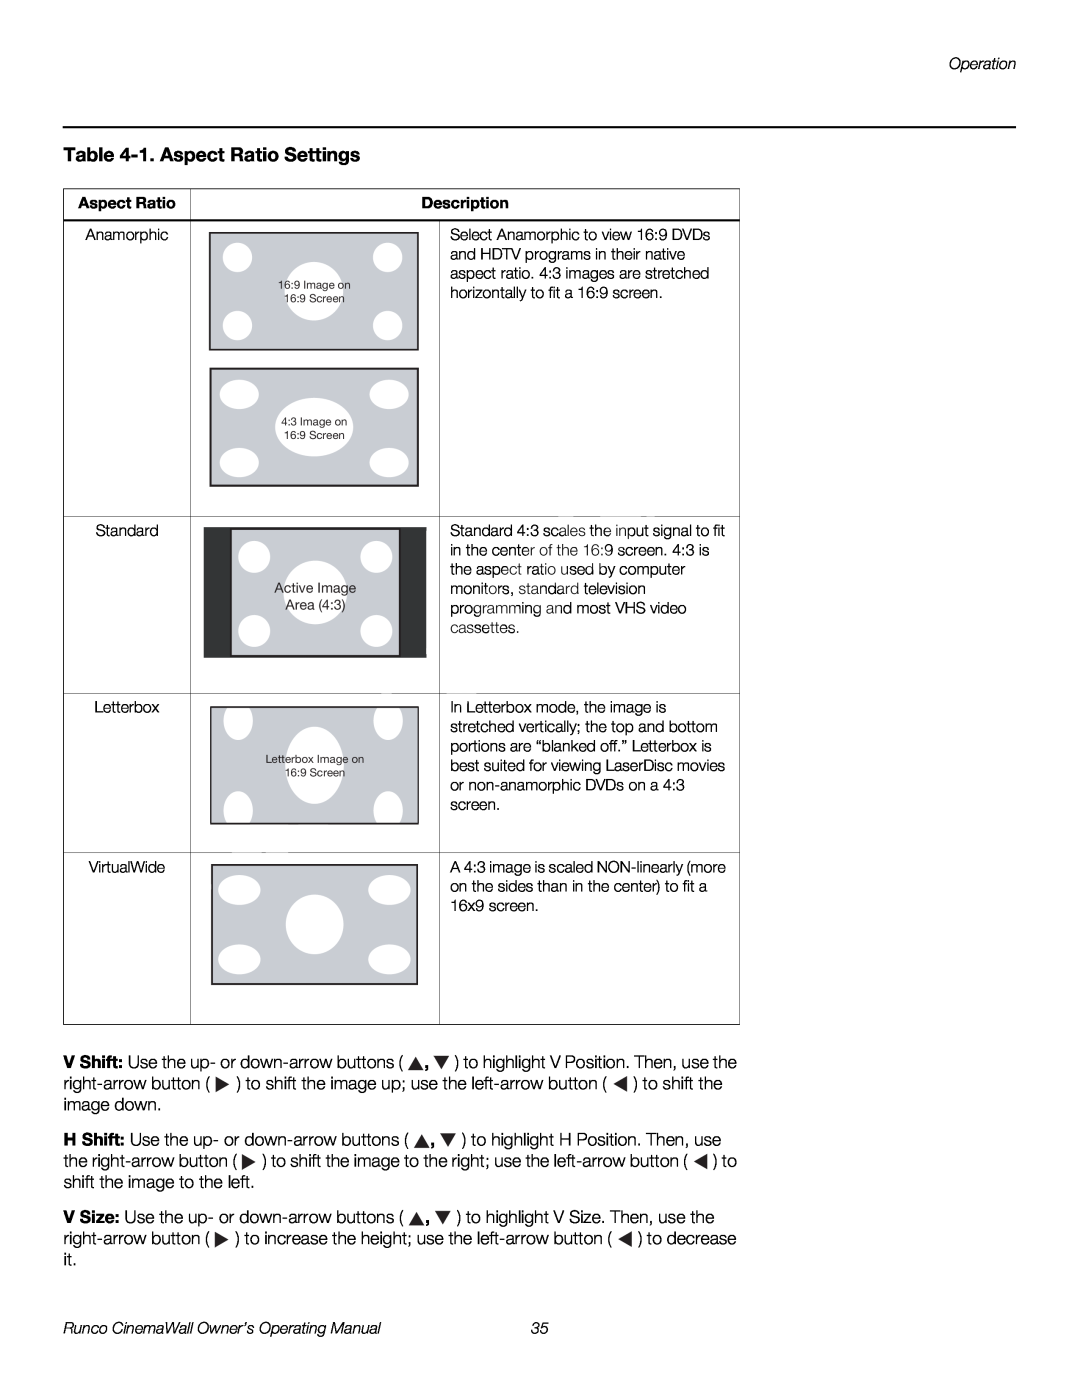 Runco CW-50XA, CW-61, CW-42HD manual 1. Aspect Ratio Settings, Description 